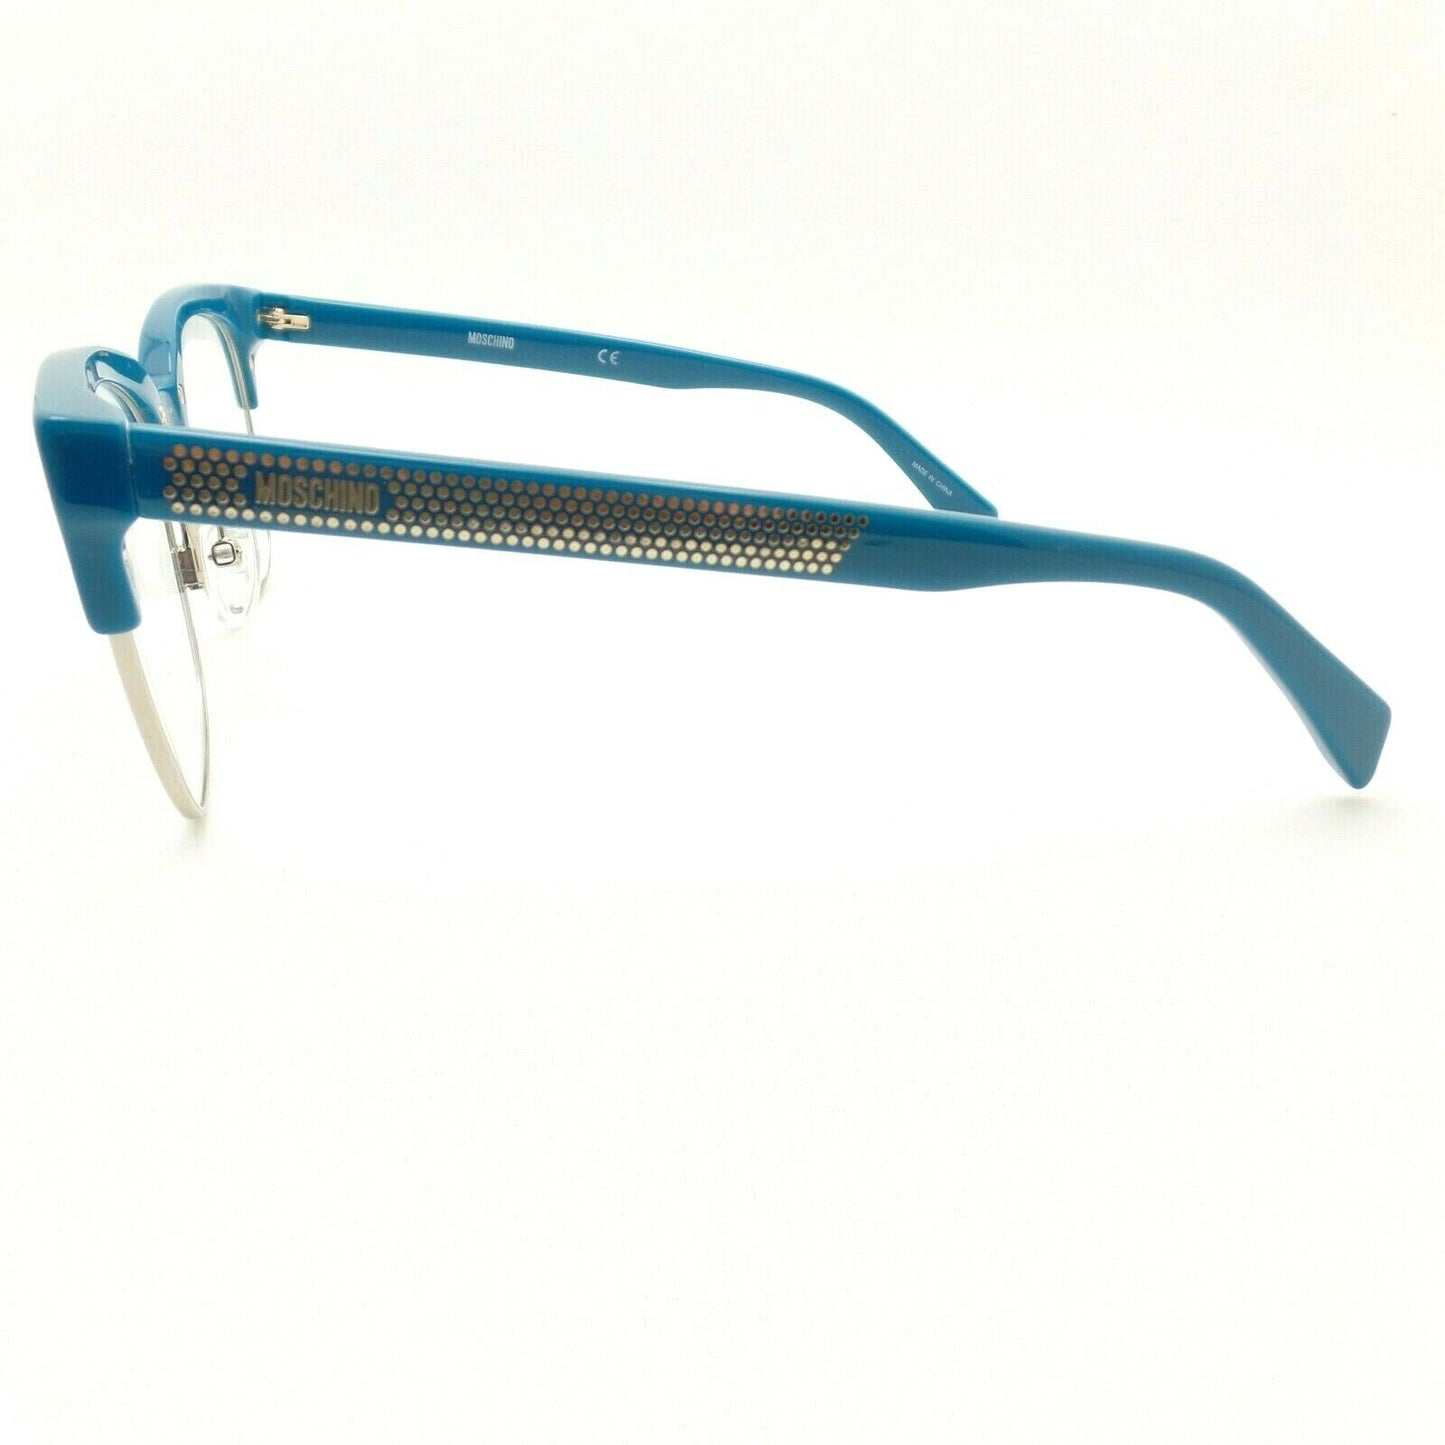 Moschino MOS519-ZI9 51mm New Eyeglasses